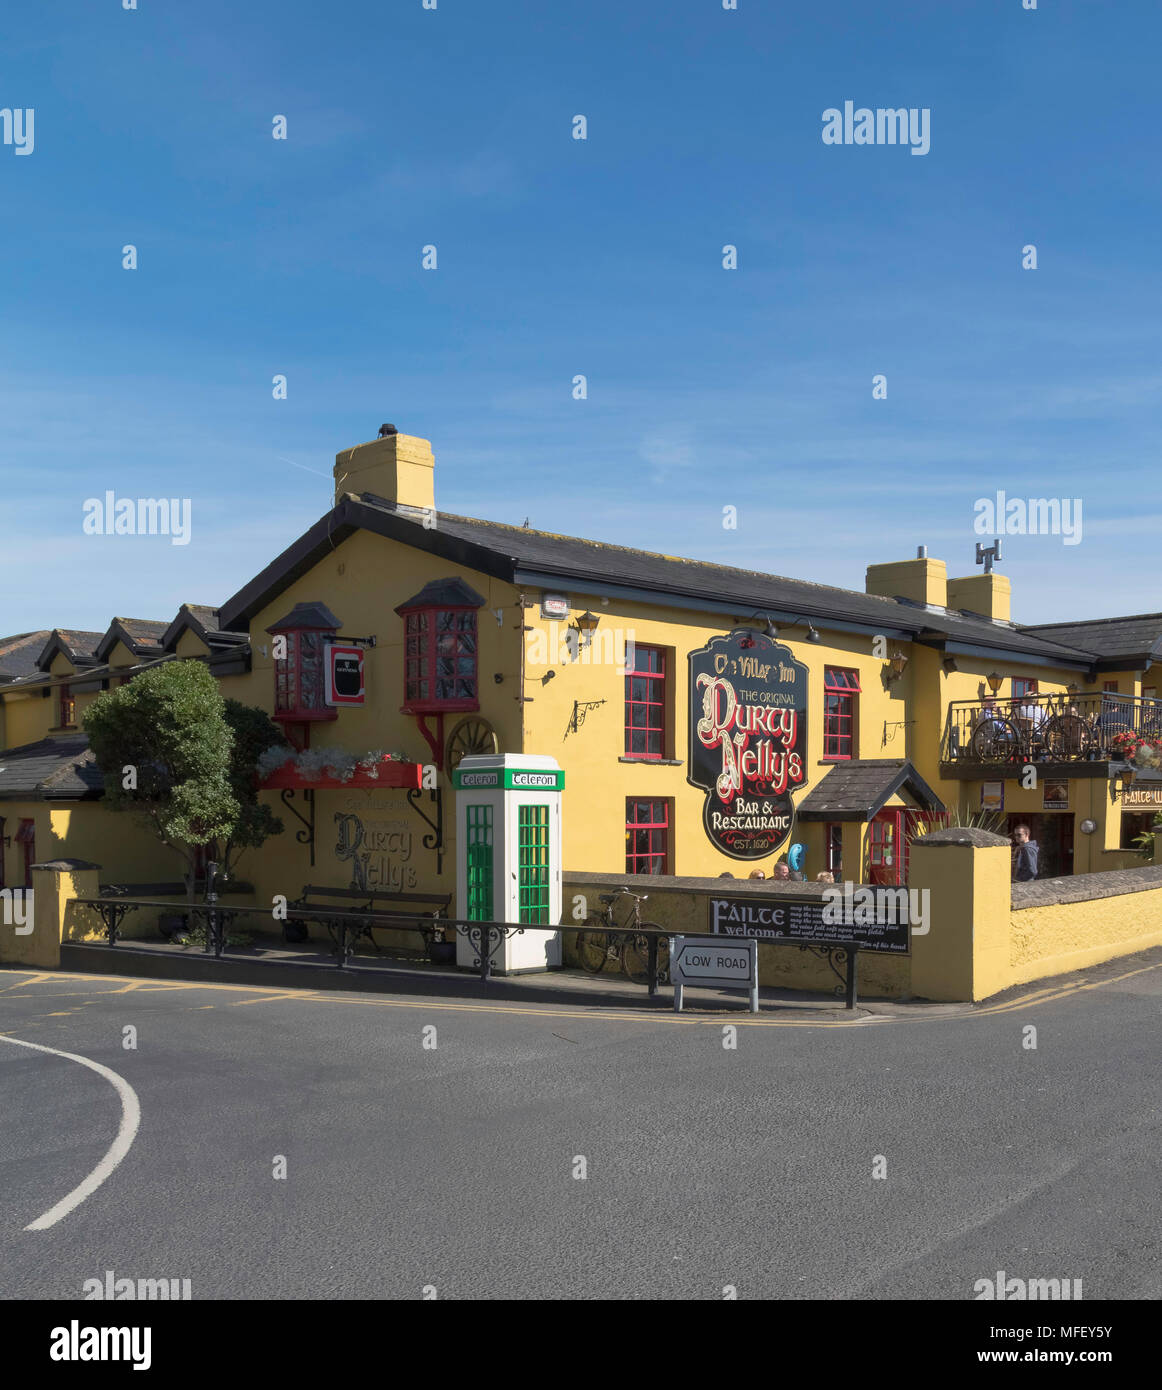 The Original Durty Nelly's Irish Pub, Bunratty, Limerick, Ireland, Europe Stock Photo